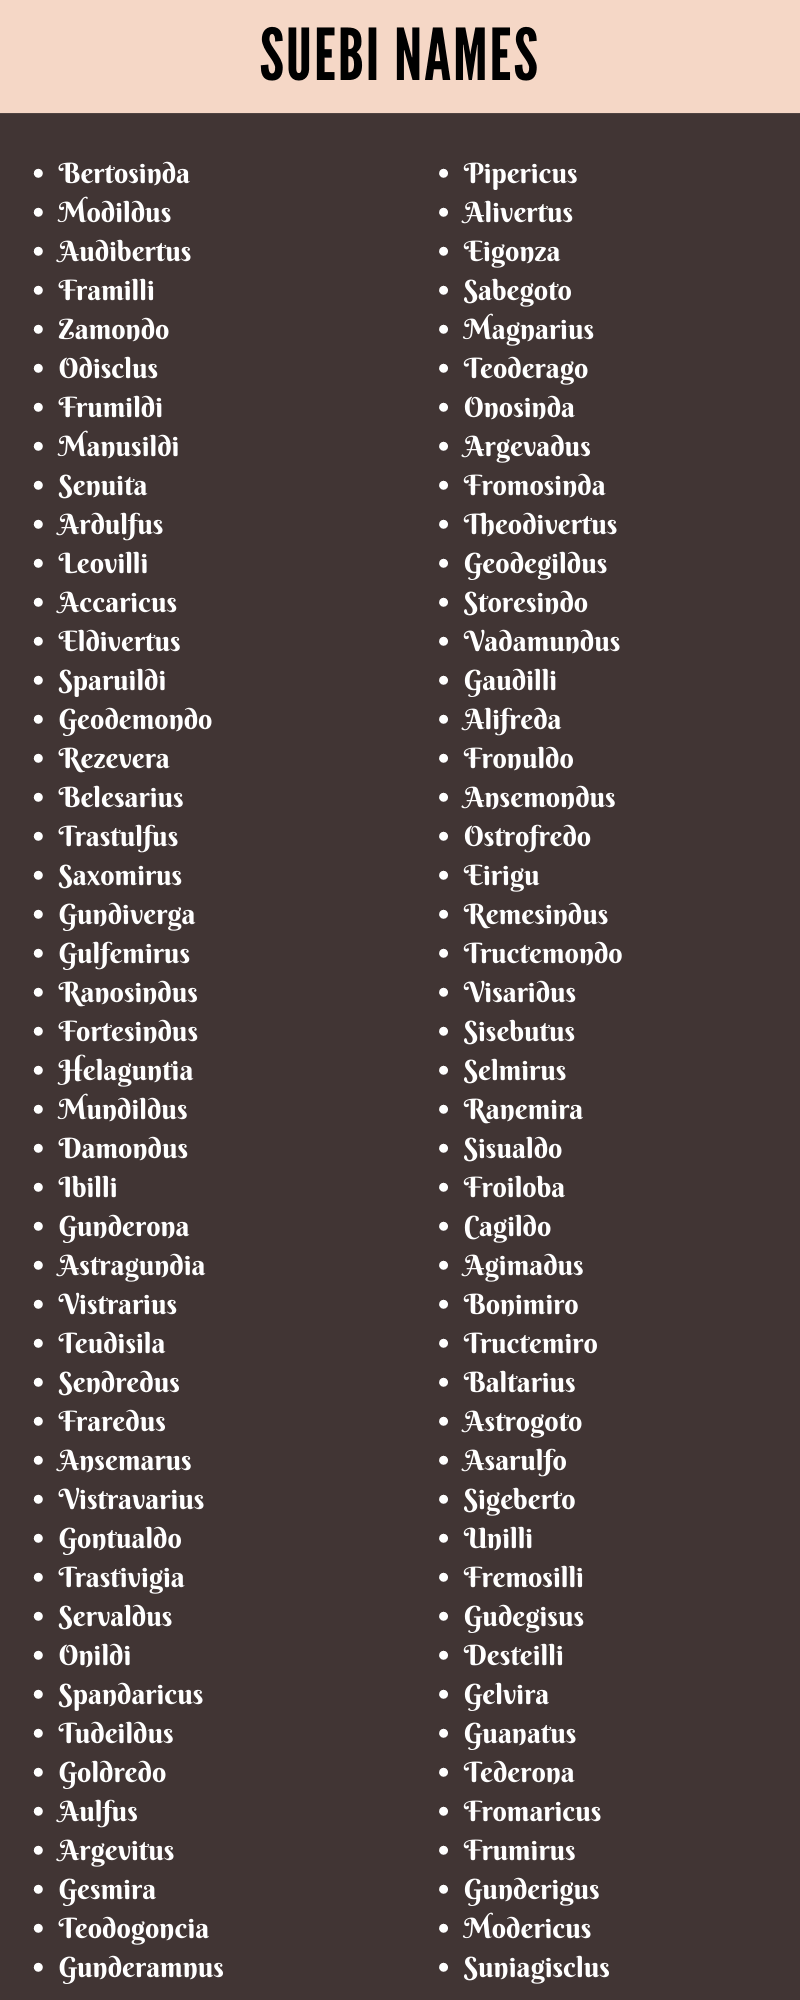 Suebi Names